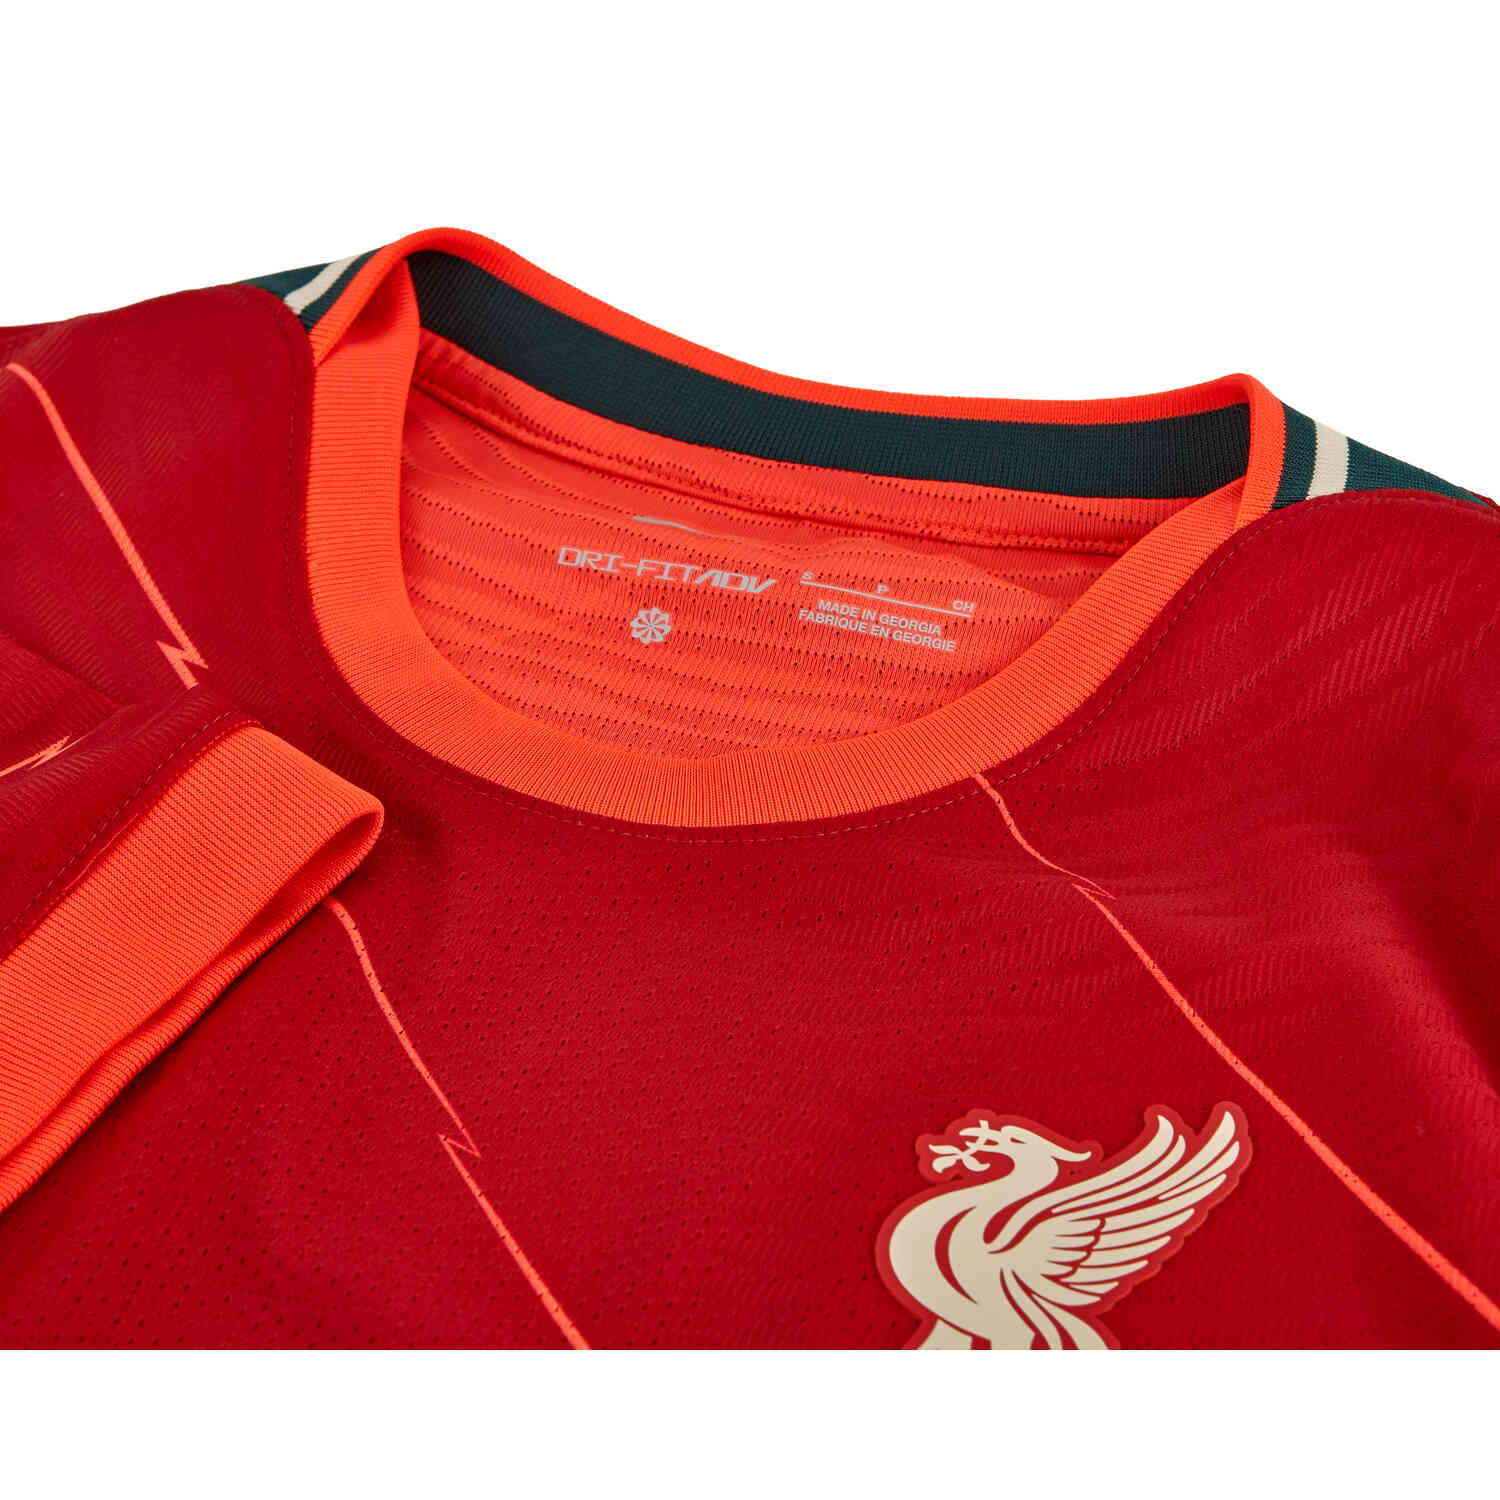 2021/22 Nike Mohamed Salah Liverpool Home Match Jersey - SoccerPro